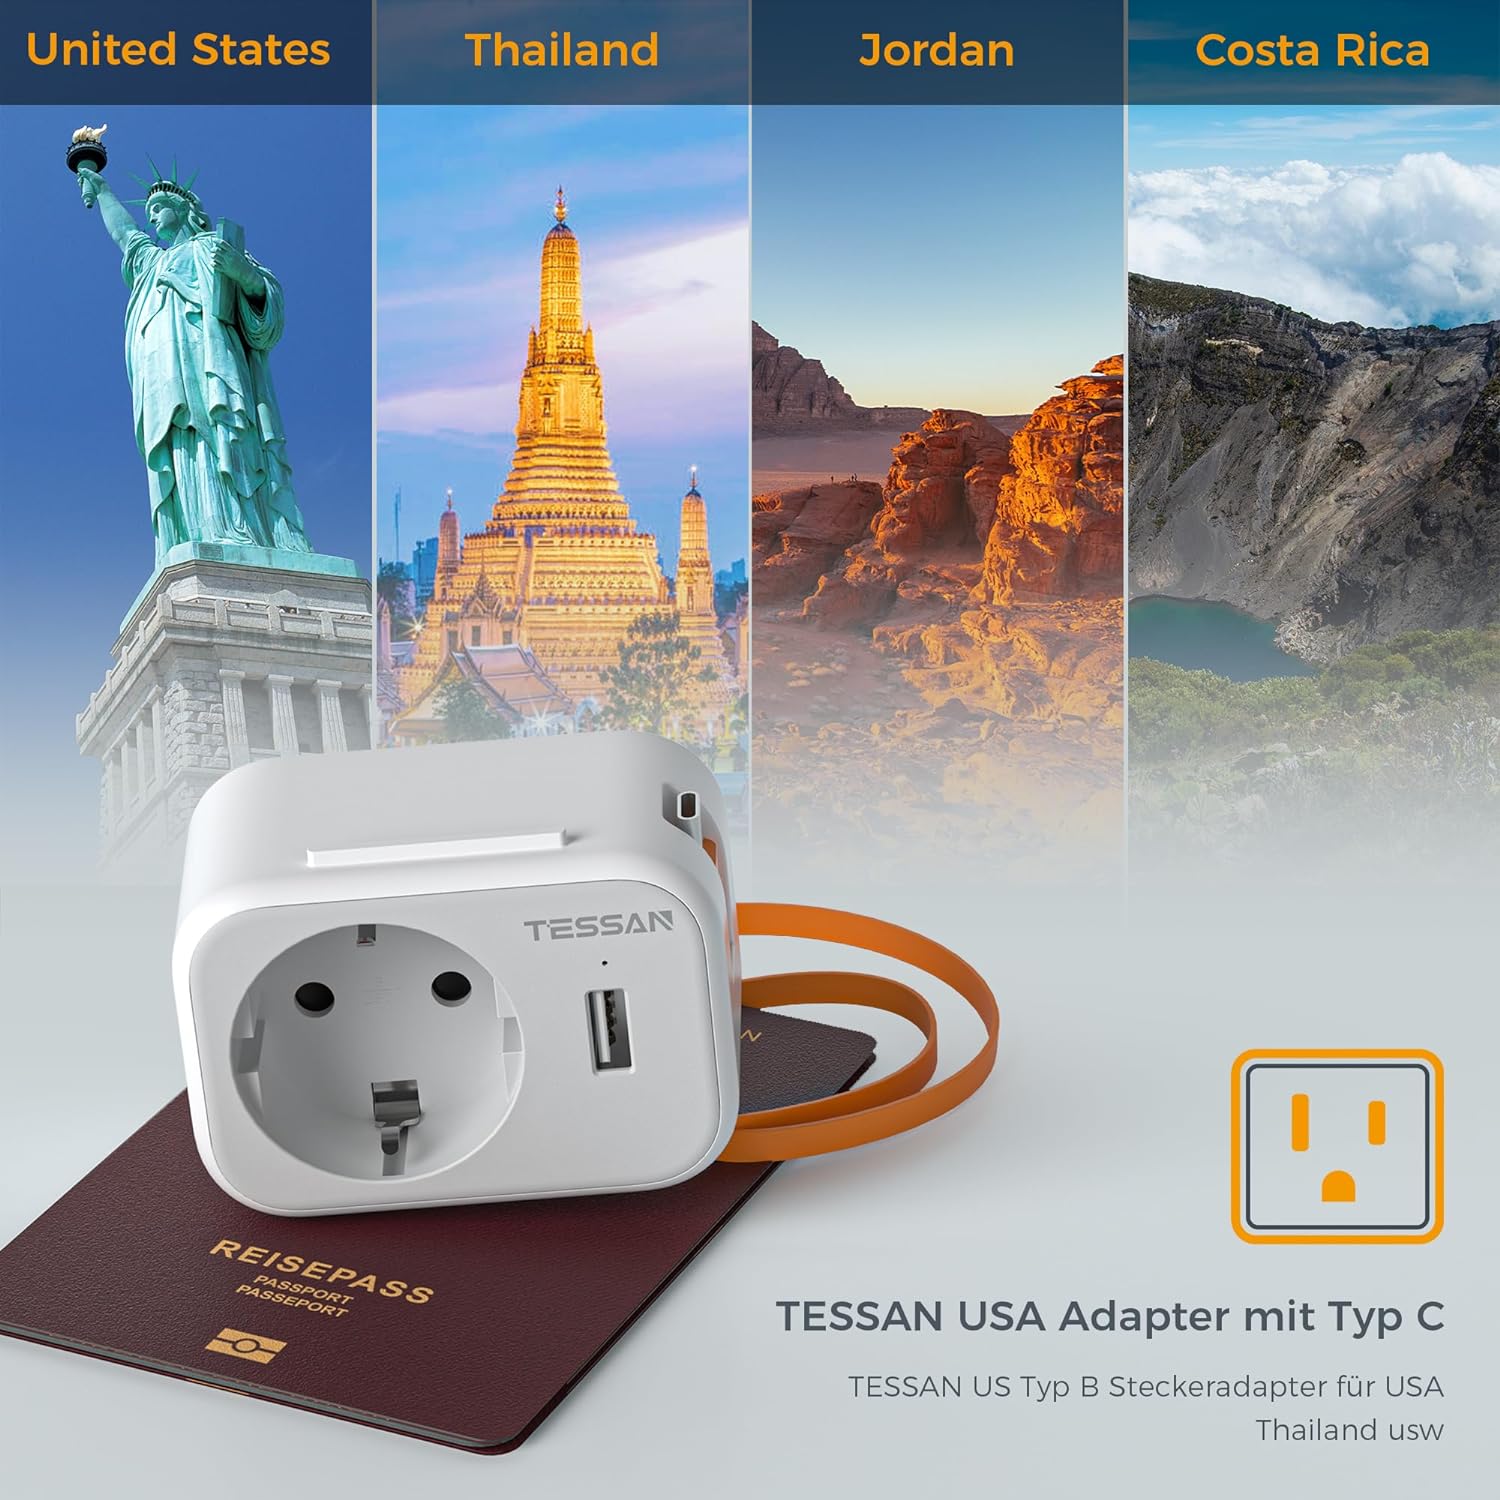 TESSAN  3 in 1 Reiseadapter USA mit 15 cm USB C Kabel,Typ B Reiseadapter